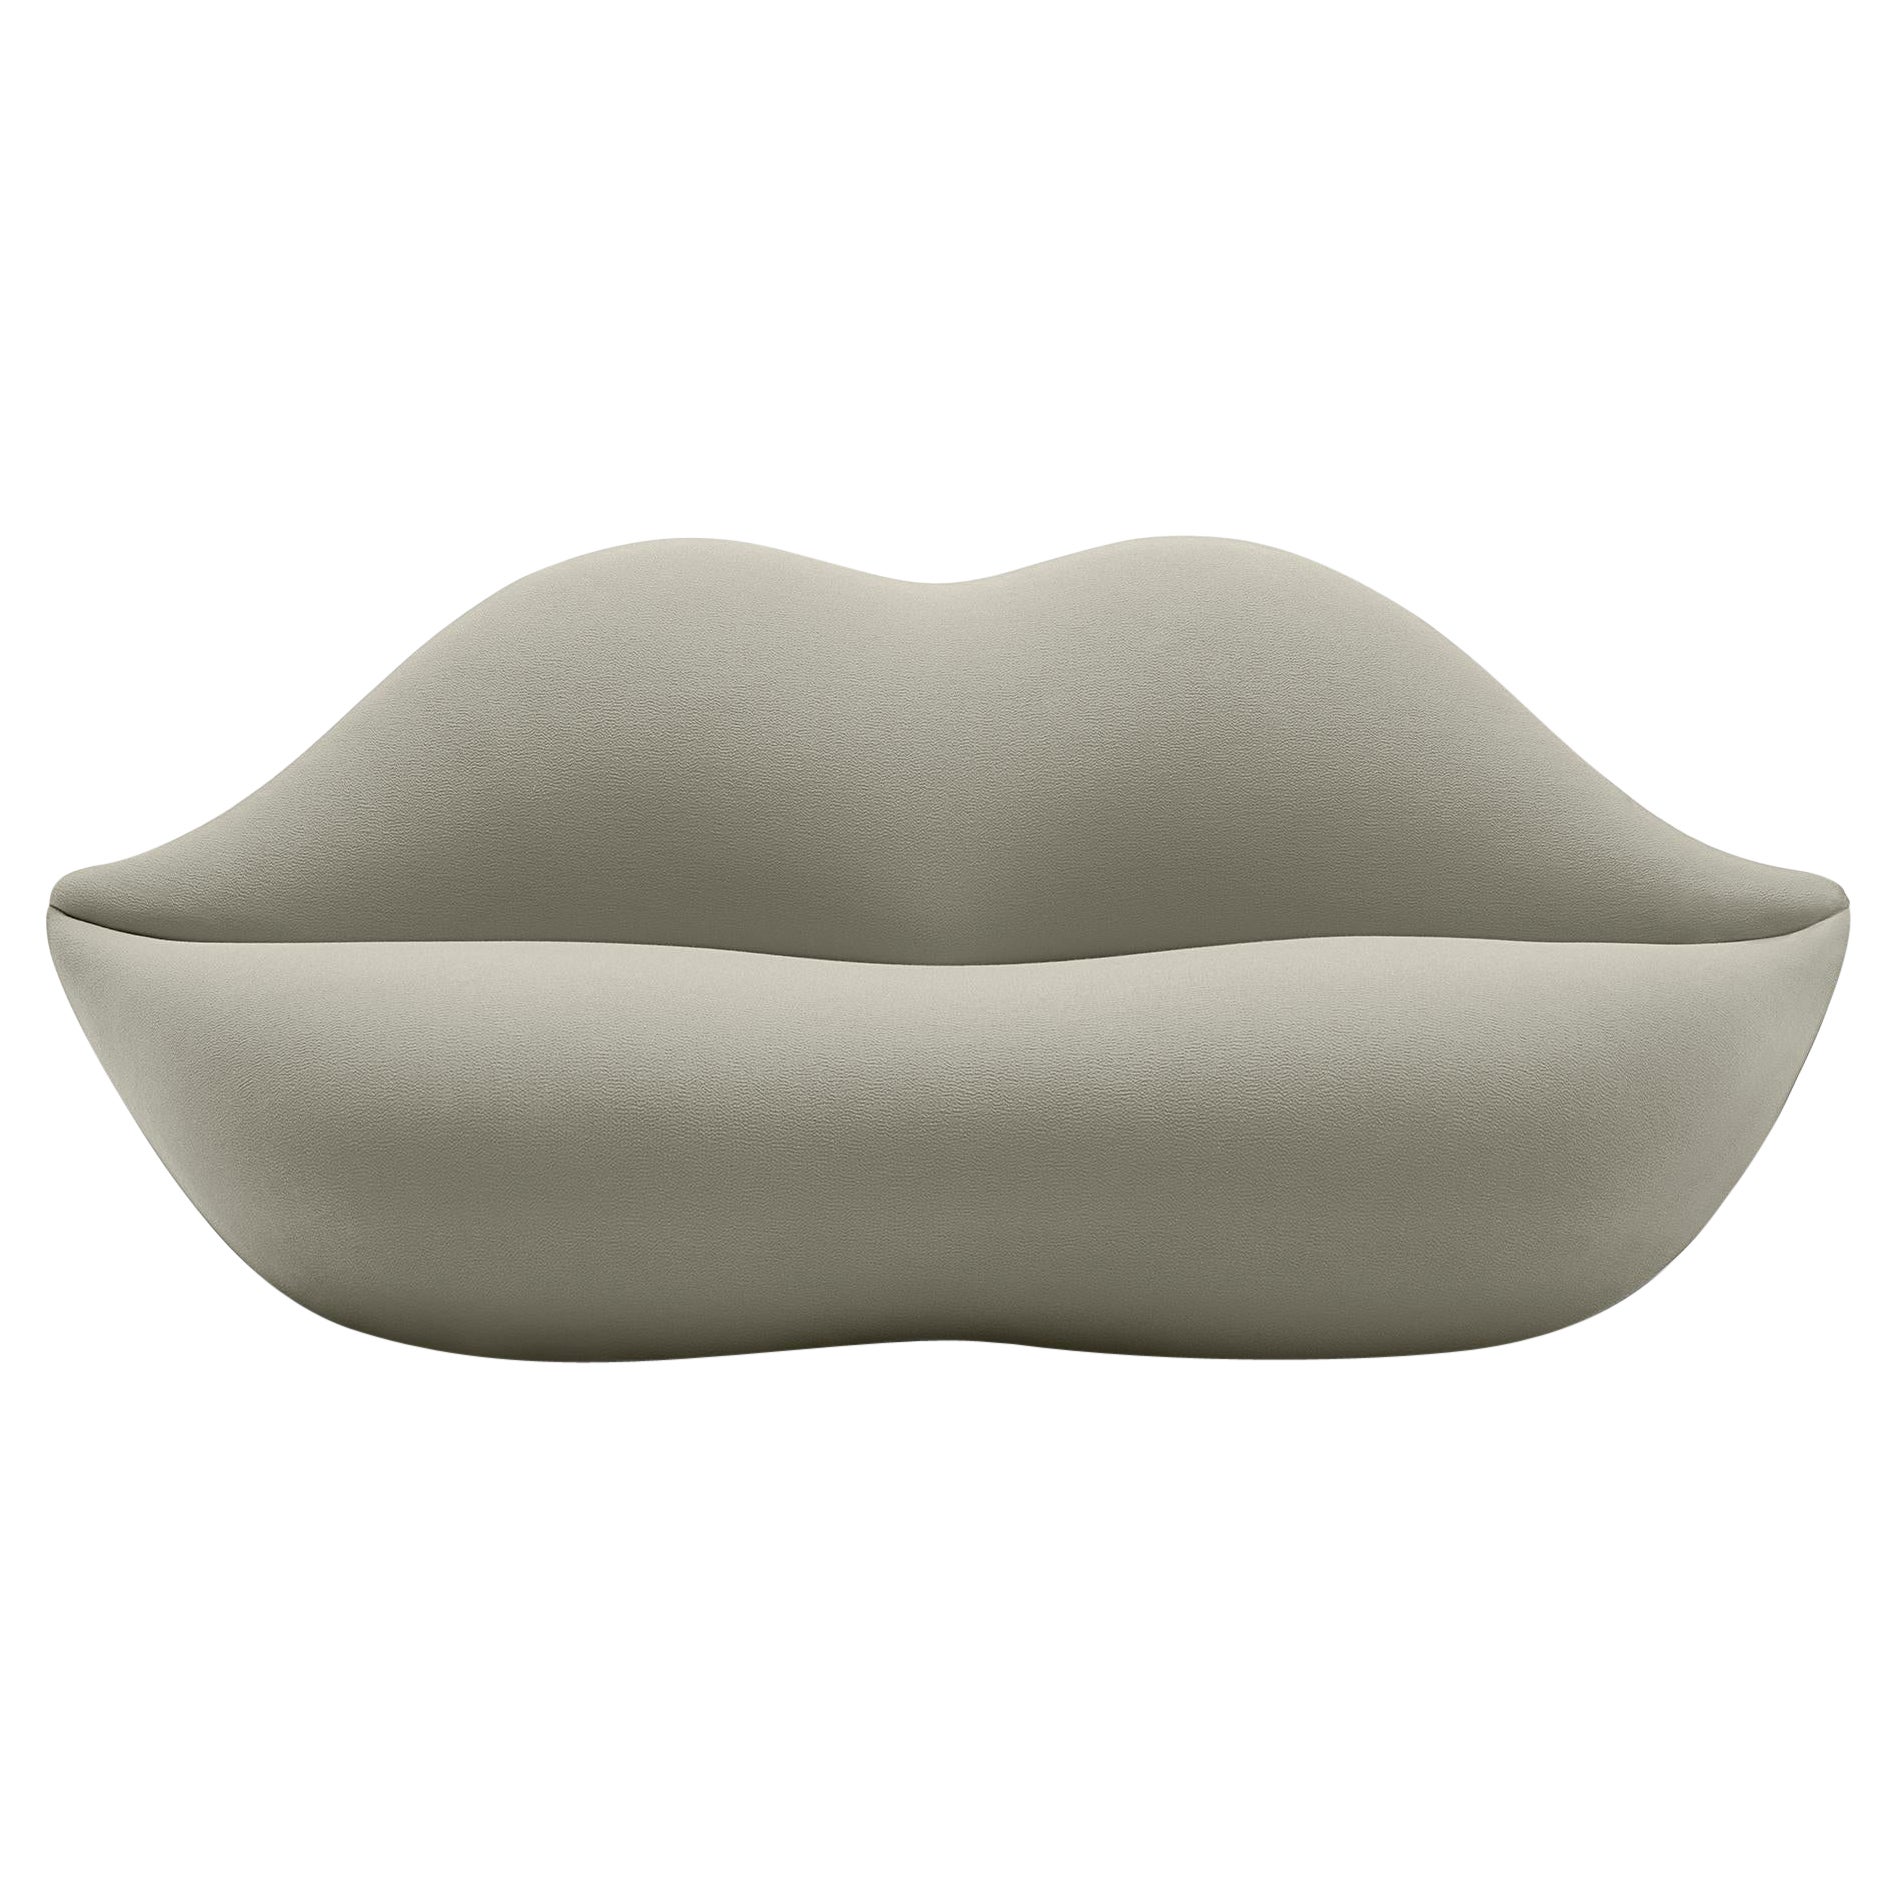 Gufram, 'Bocca Unlimited' Lip-Shaped Sofa, 810-Cream, by Studio 65 For Sale